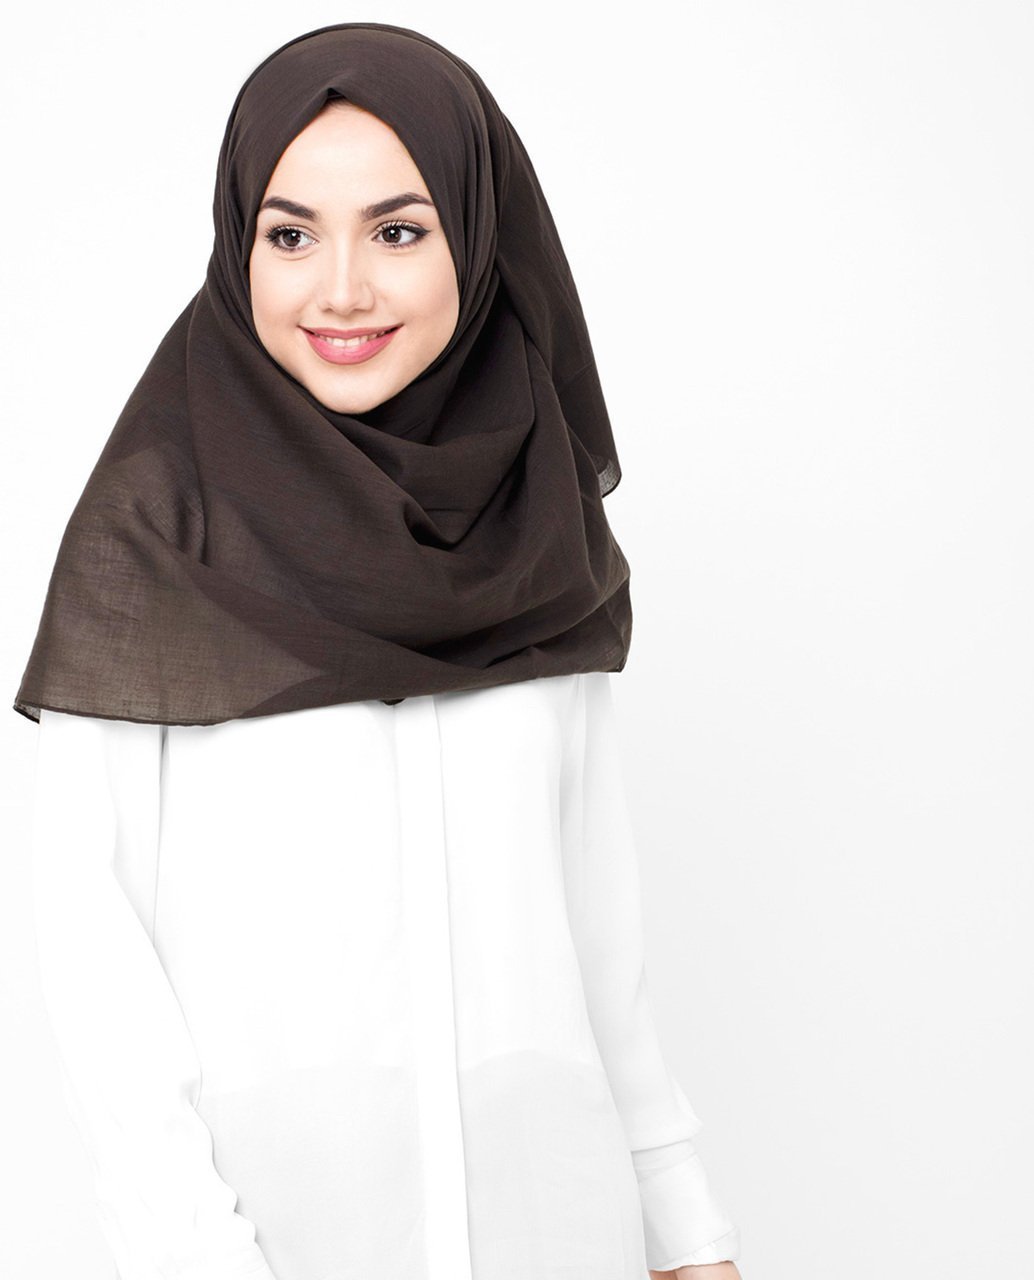 Inessence Shop Viscose Jersey Hijab Scarf in Turtledove Beige Color Medium 27x70 / Turtledove Beige